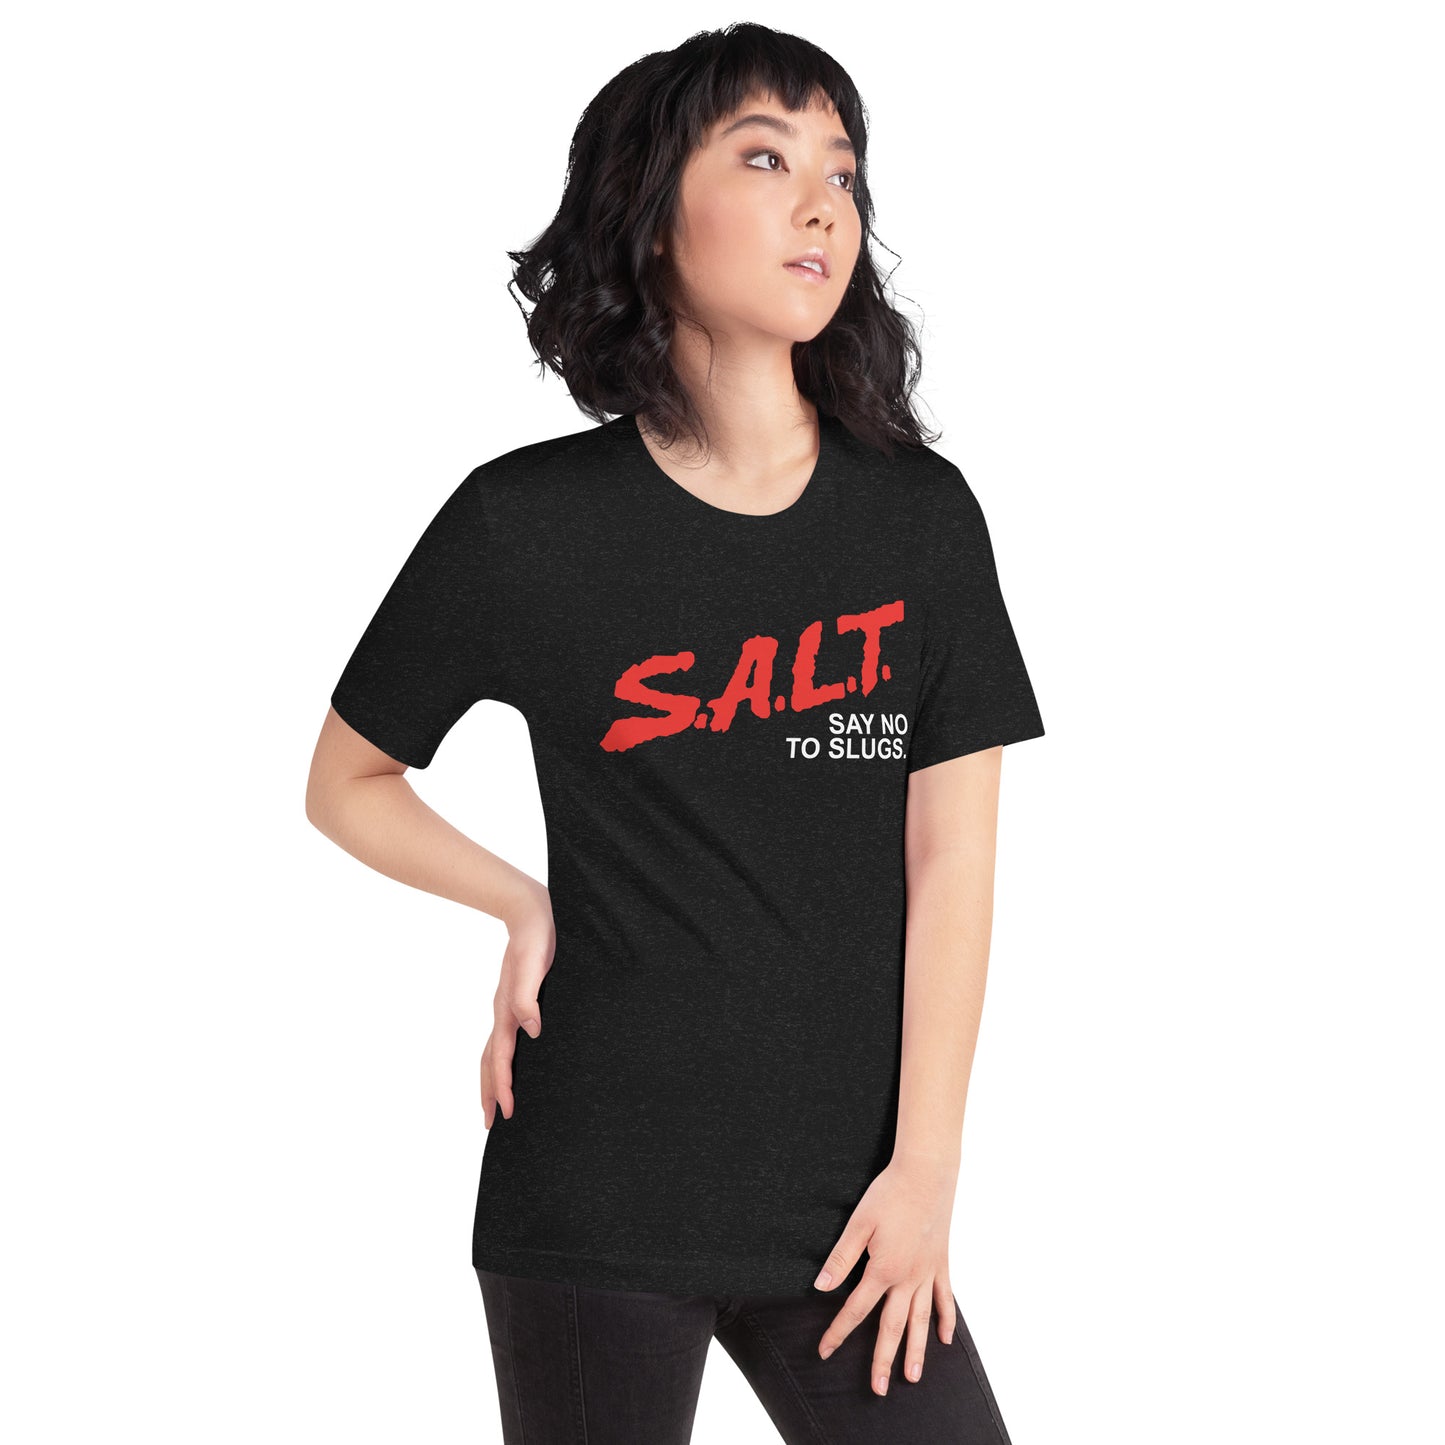 SALT - Say no to slugs. Funny Gardening T-Shirt